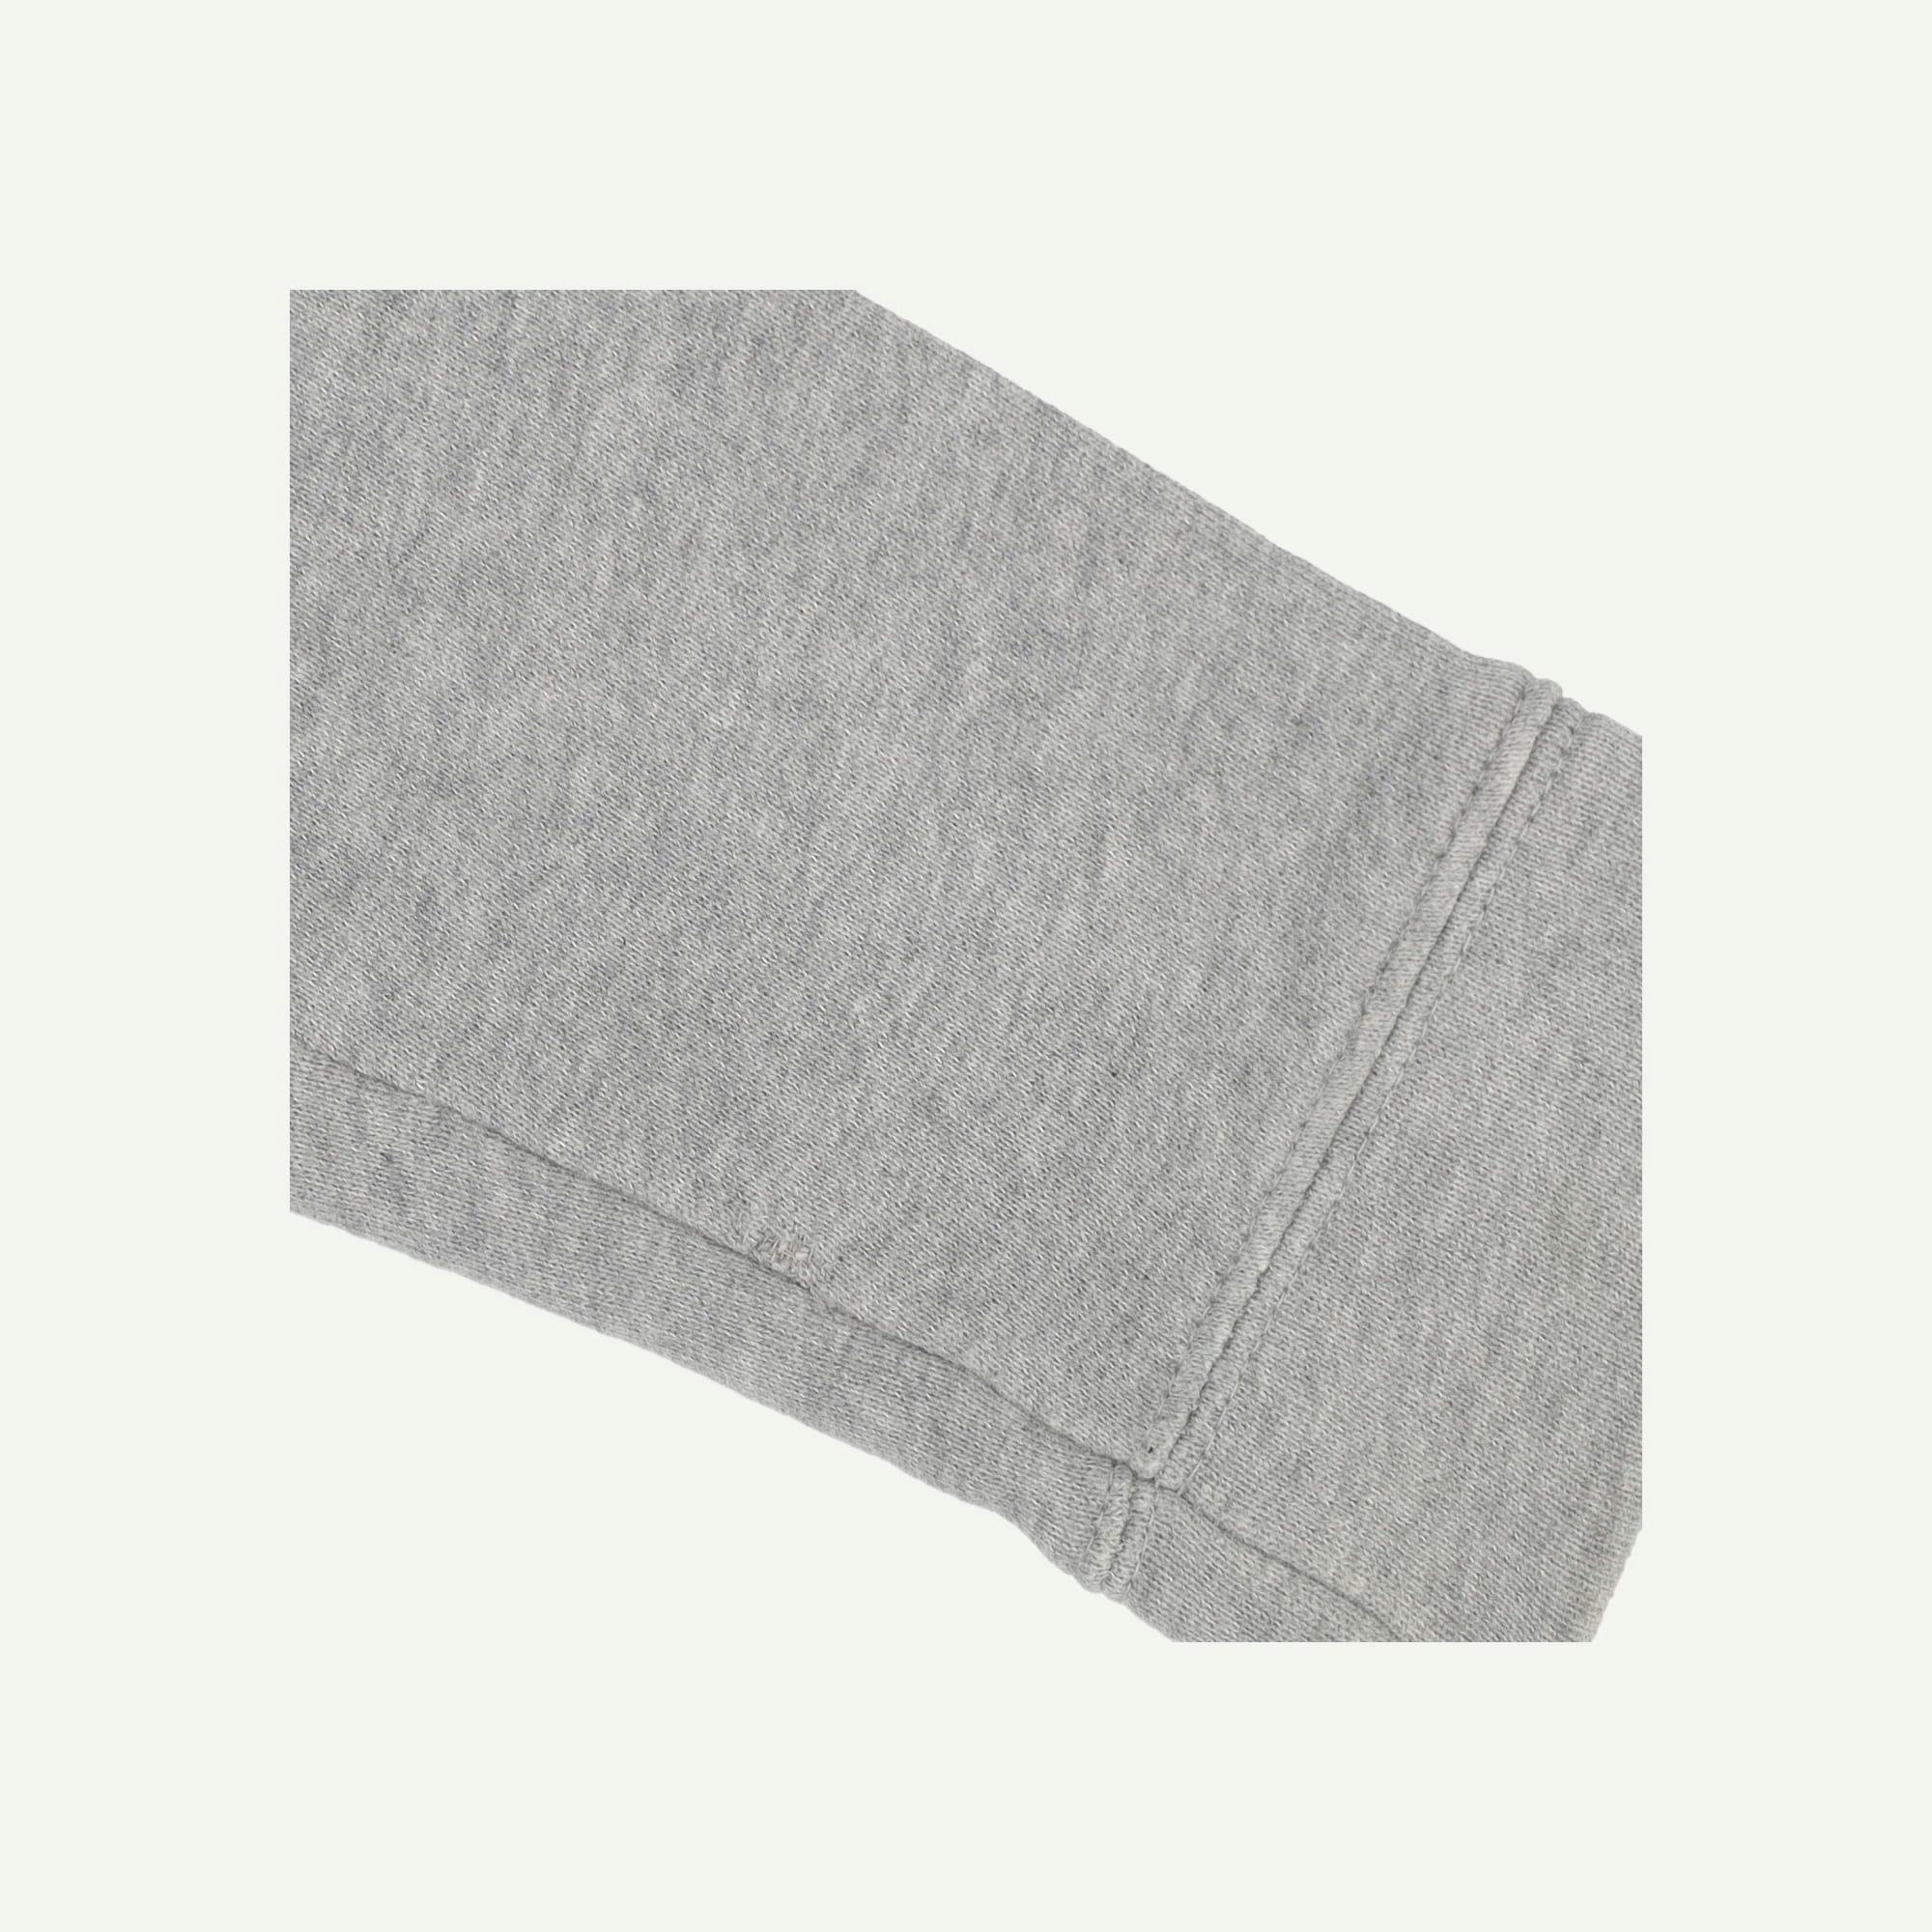 Finisterre Repaired Grey Sweatshirt